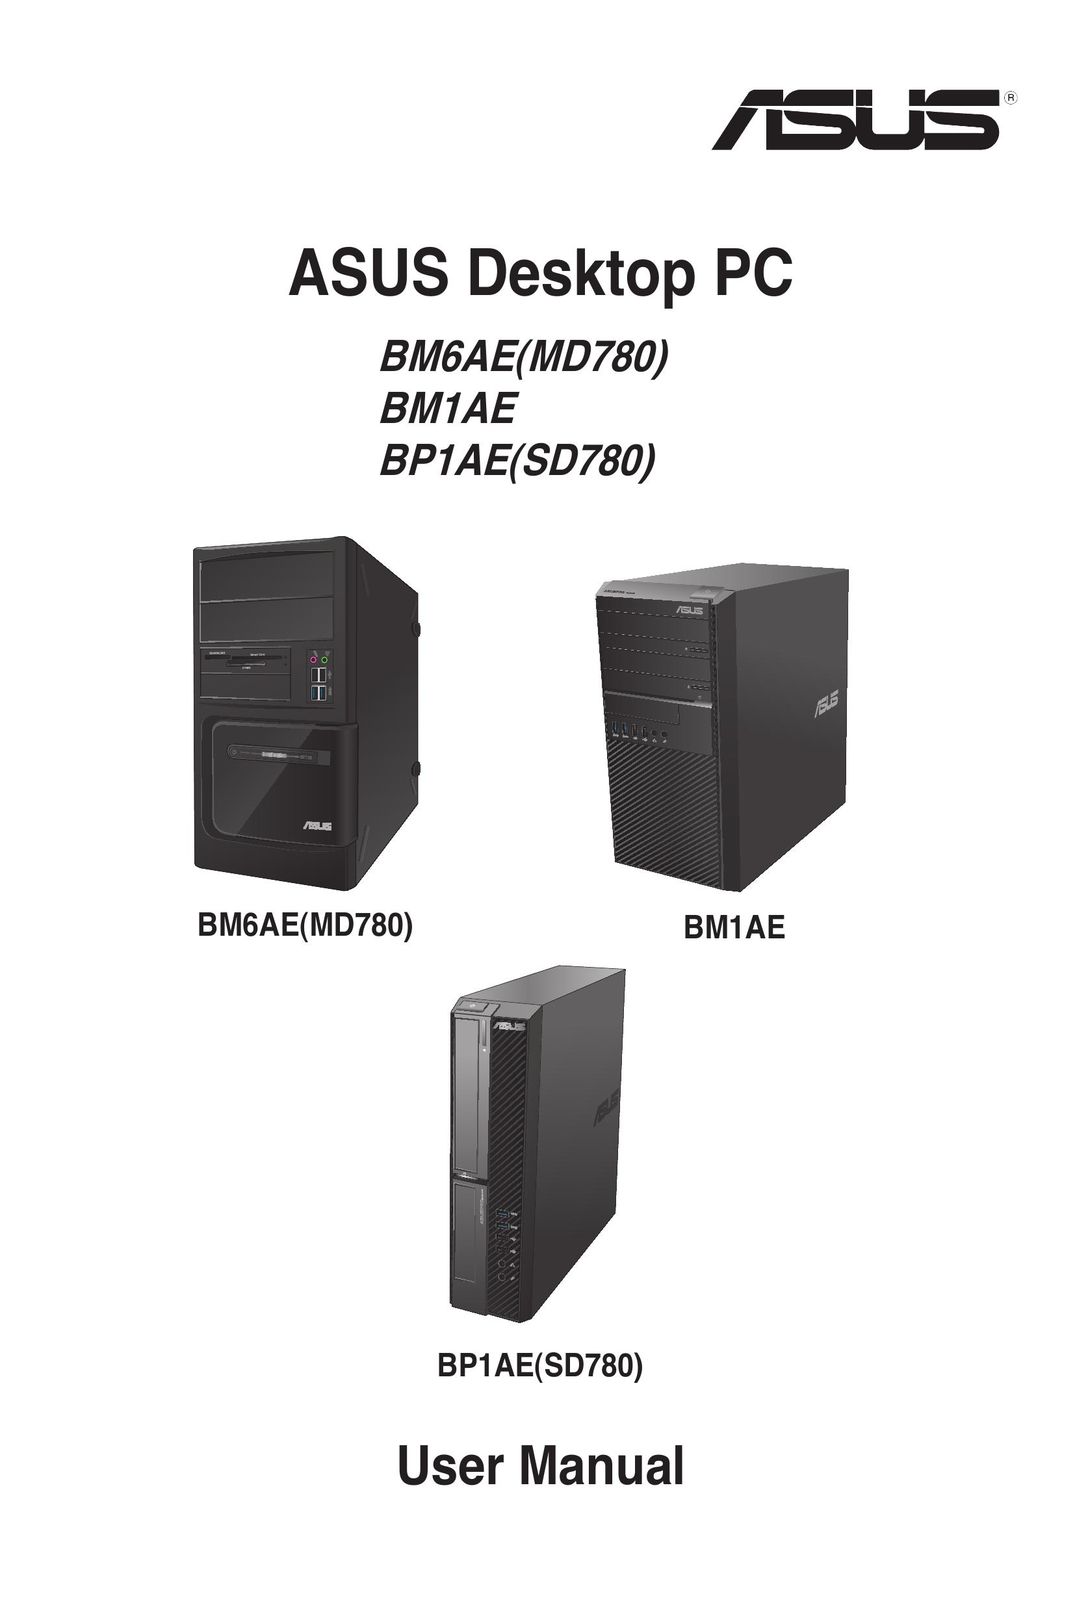 Asus BM1AEI5457S009B Personal Computer User Manual